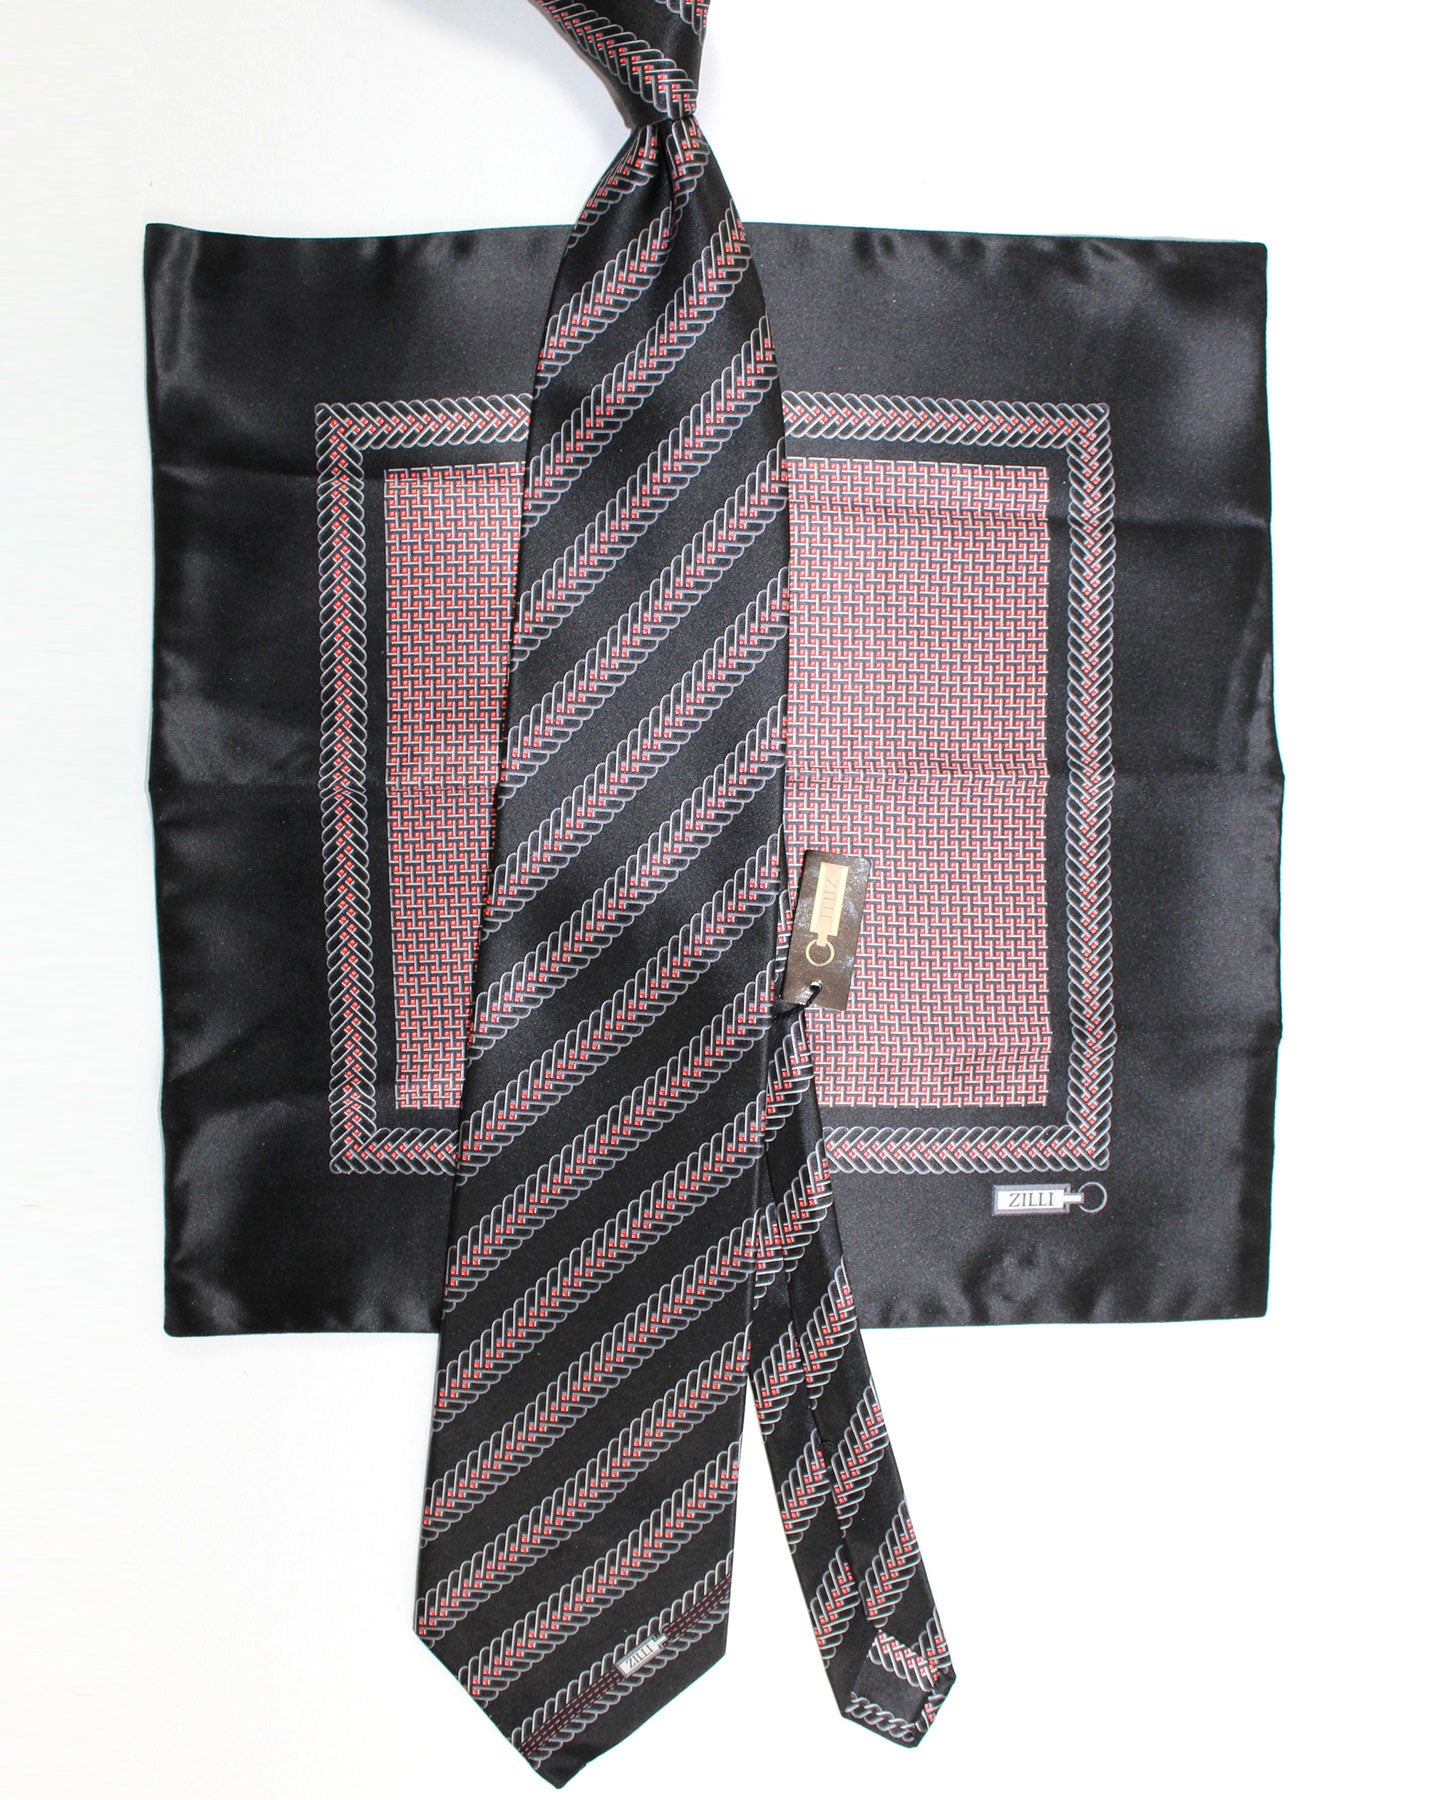 Zilli Silk Tie & Pocket Square Set Zilli Online Outlet Store - Tie